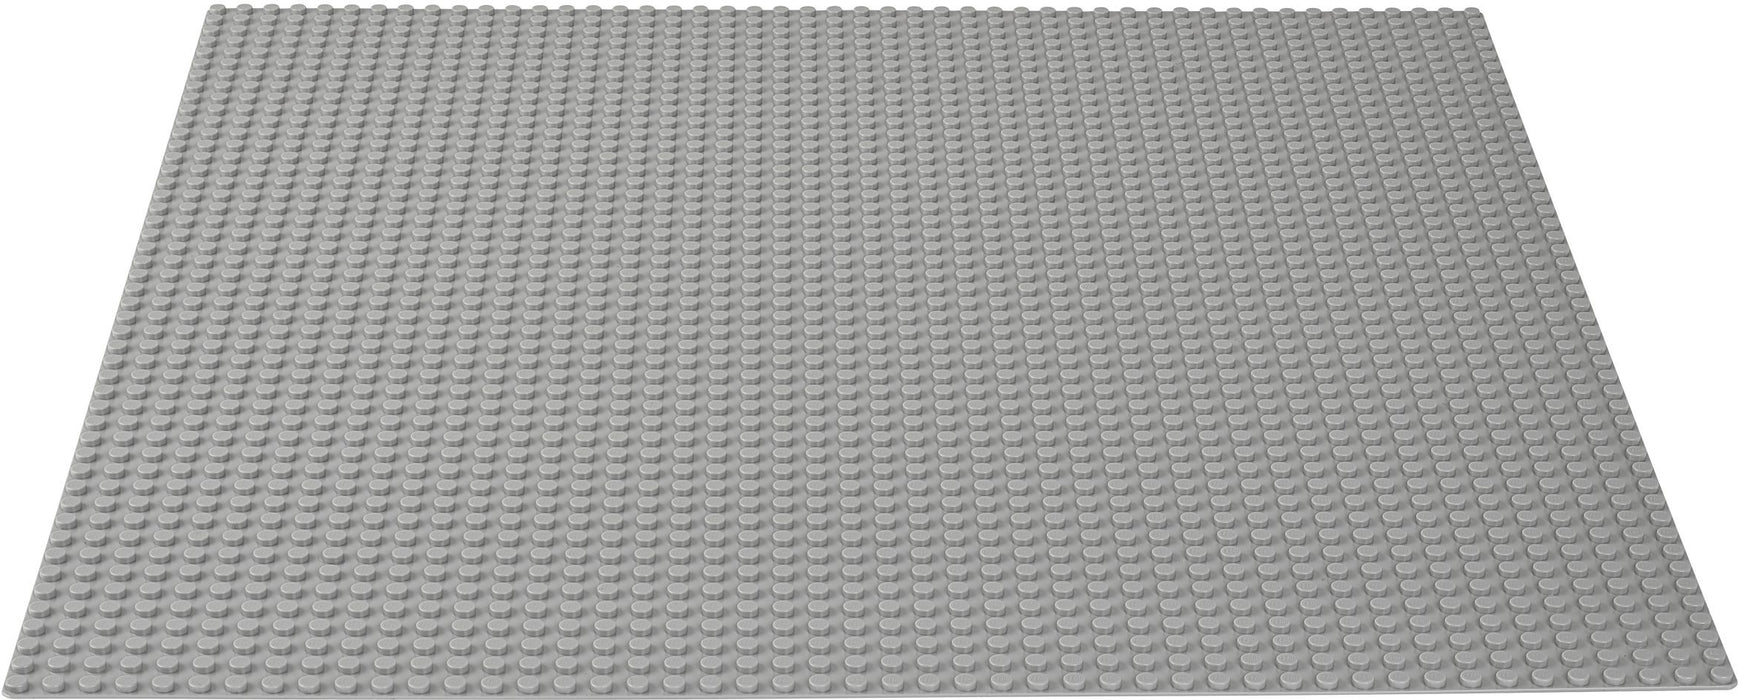 LEGO Classic 10701 48x48 Grey Baseplate